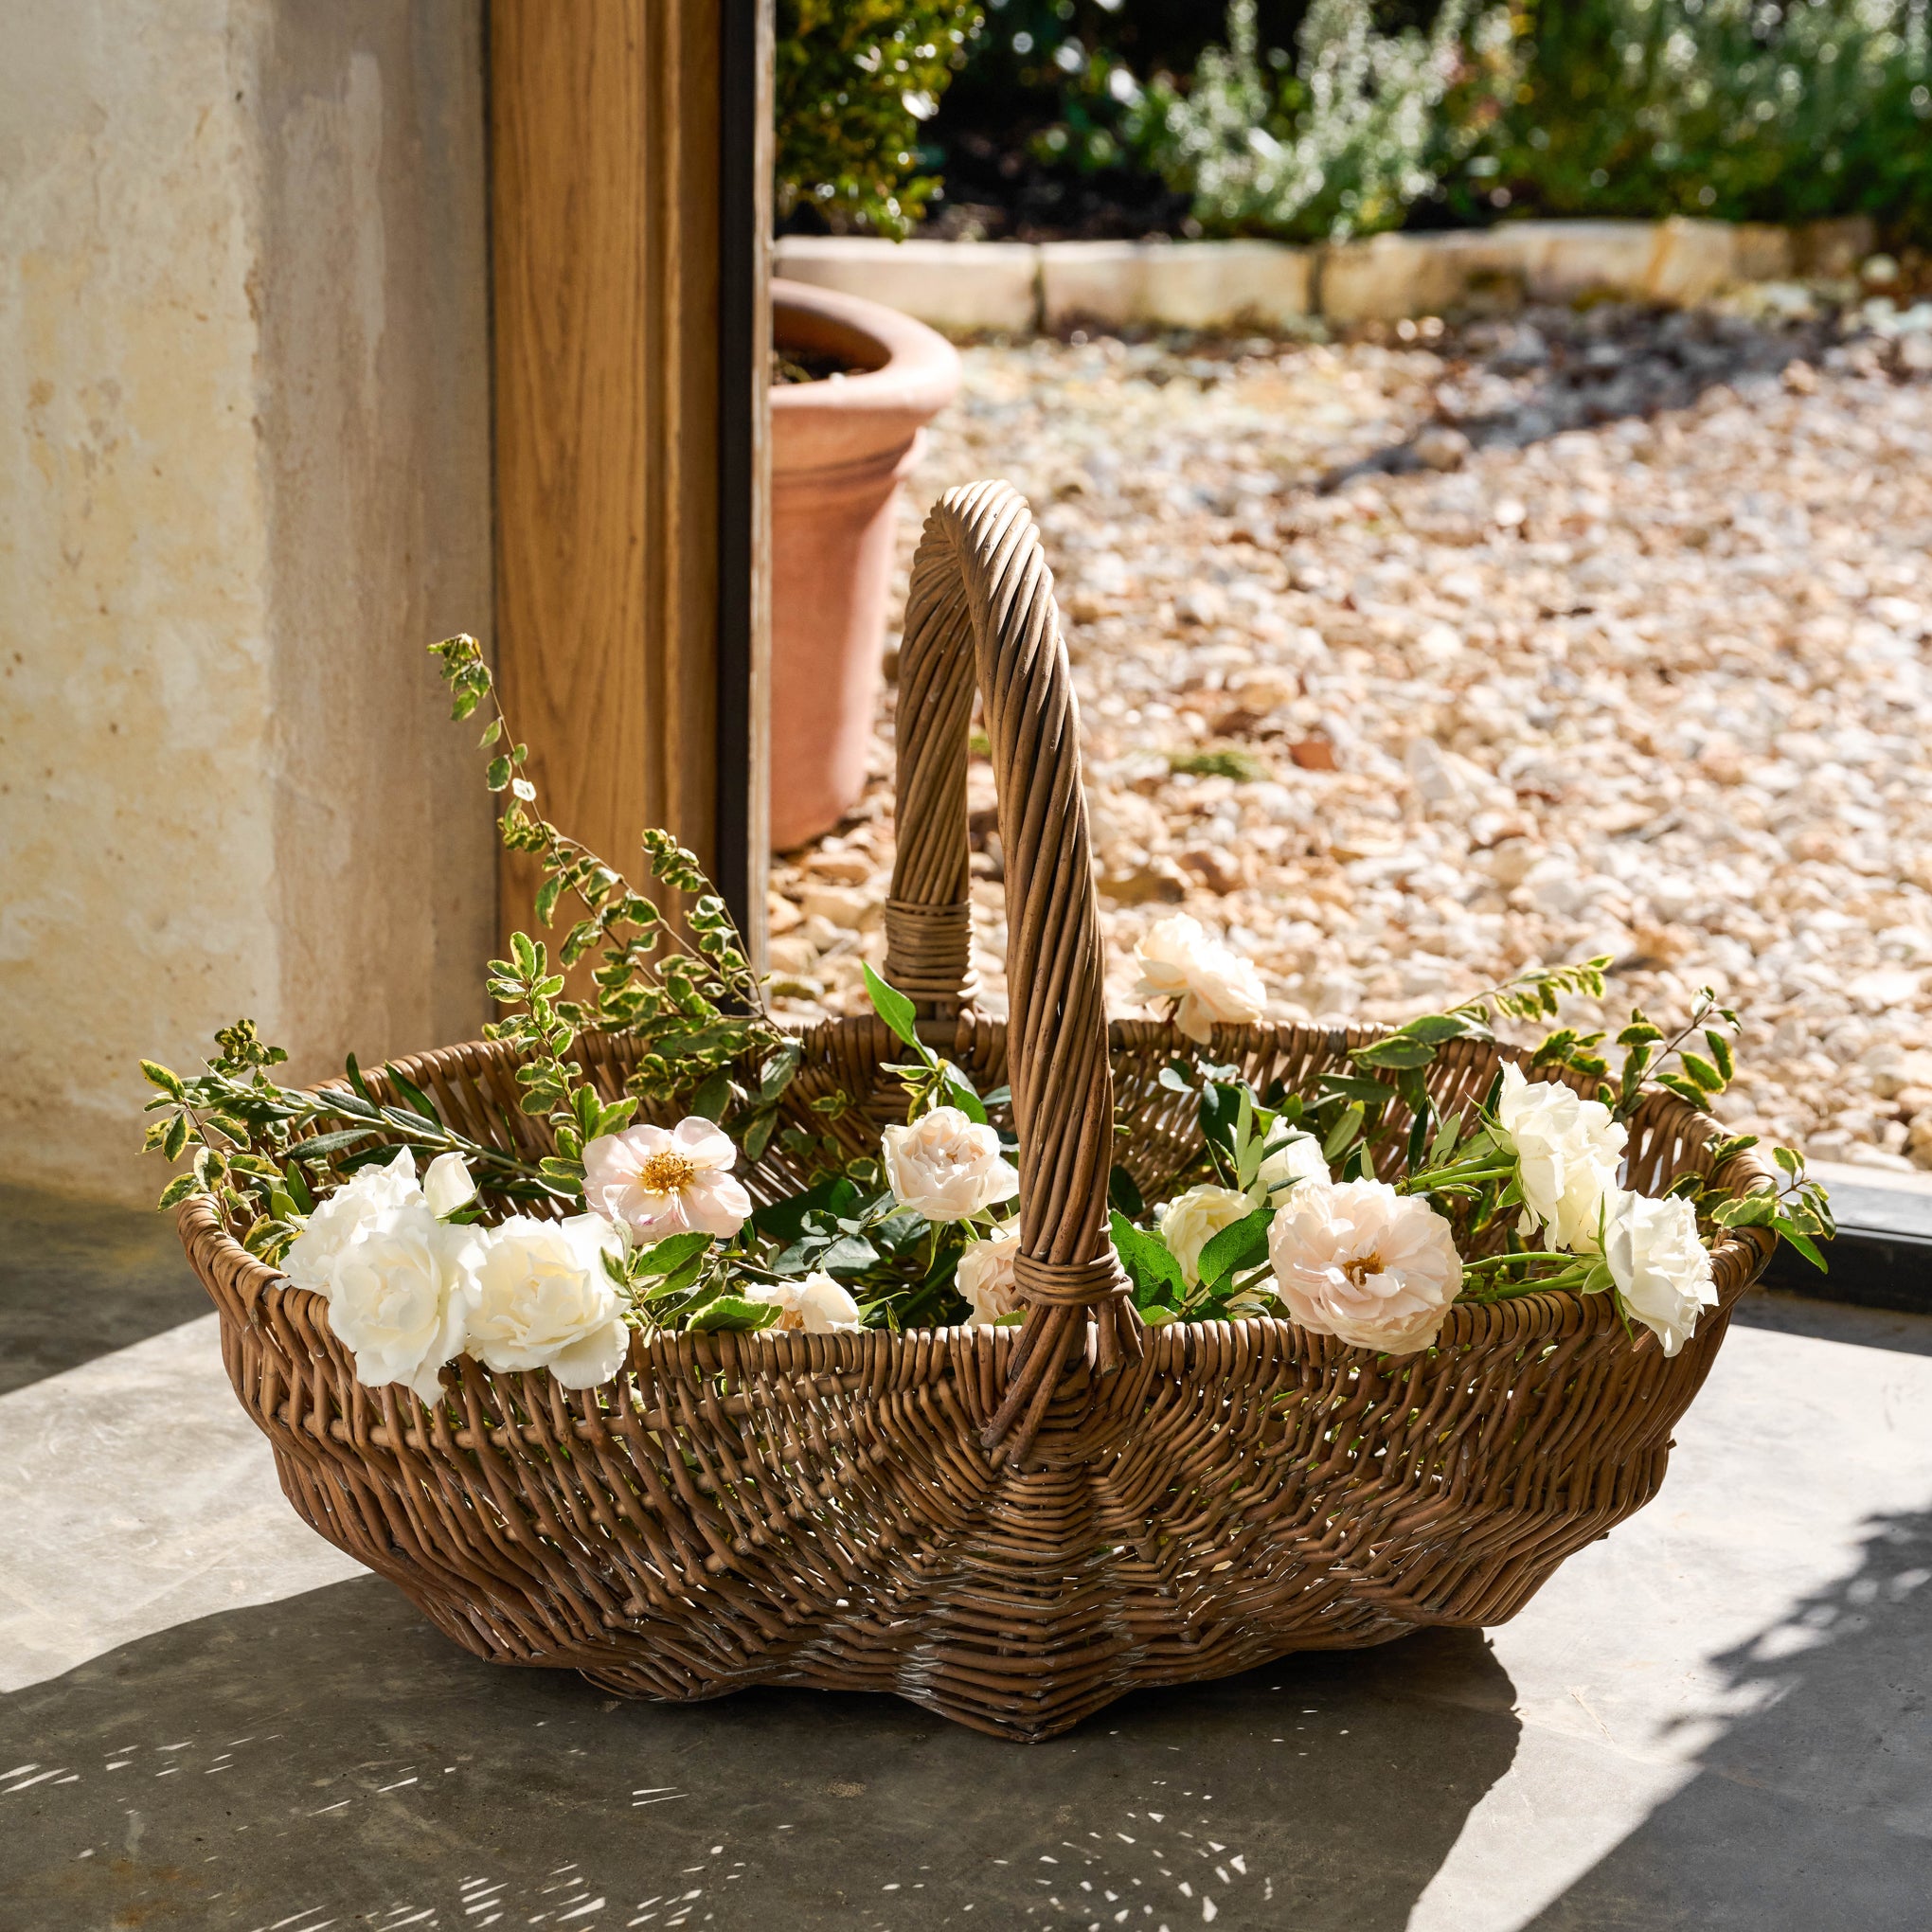 Garden Gathering Basket with flowers inside $128.00